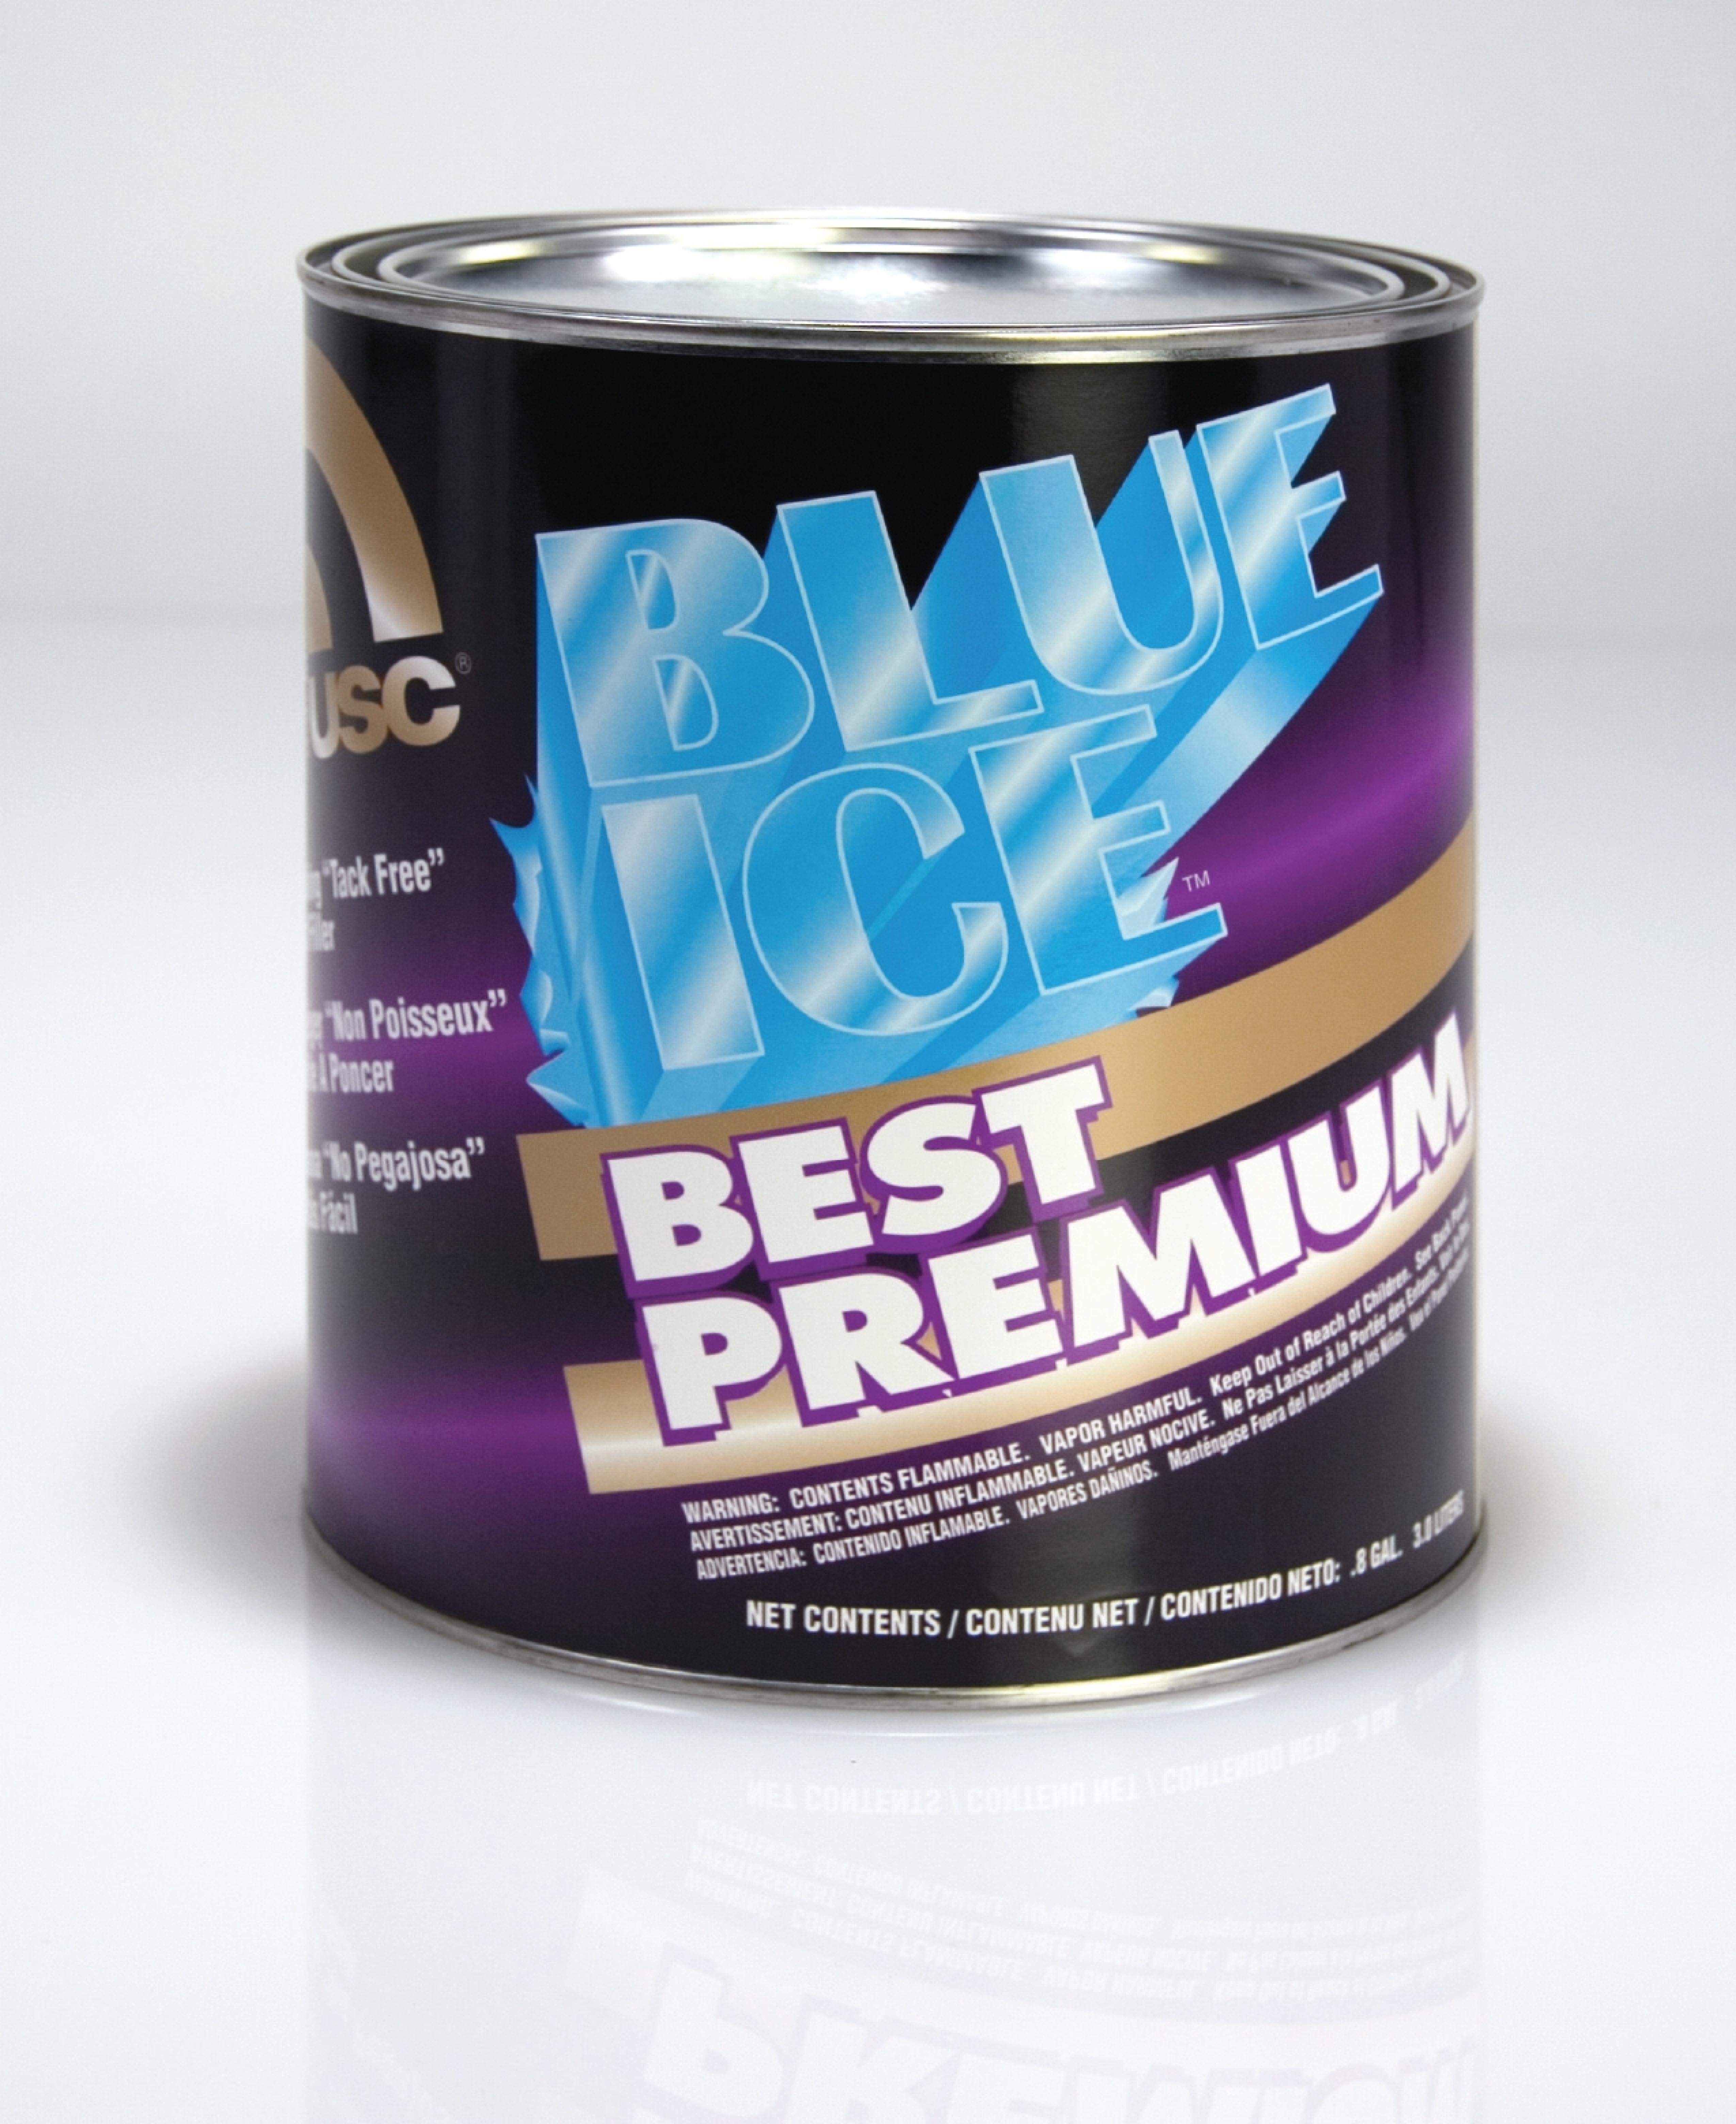 Trademark Logo BLUE ICE